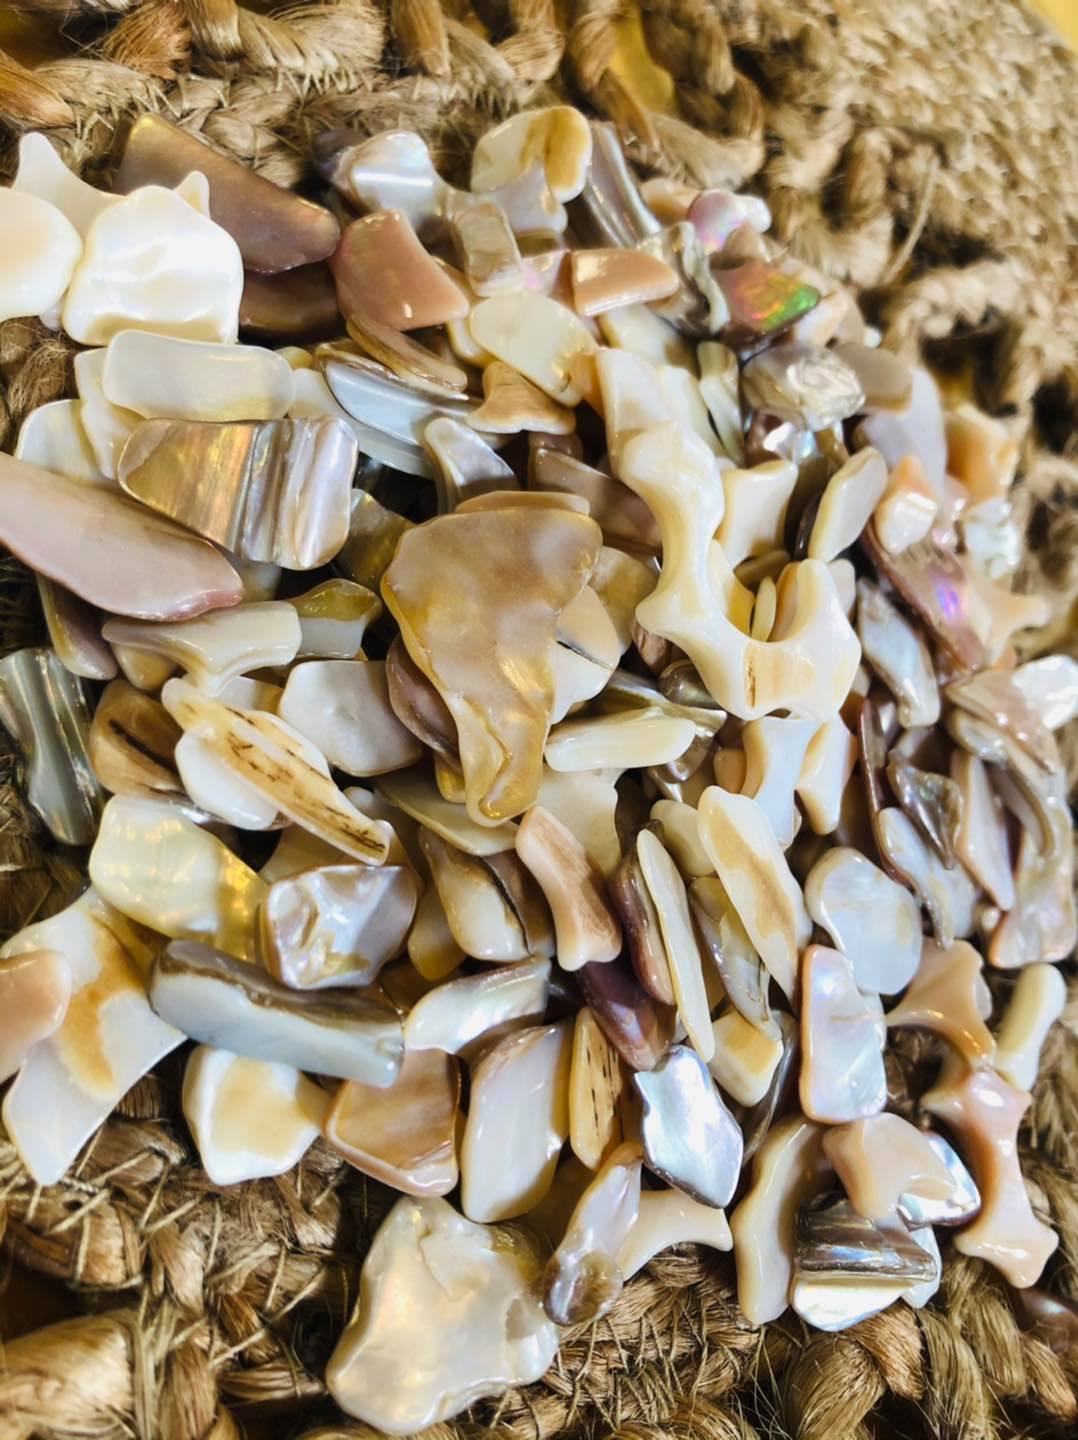 Crushed sea shells!!